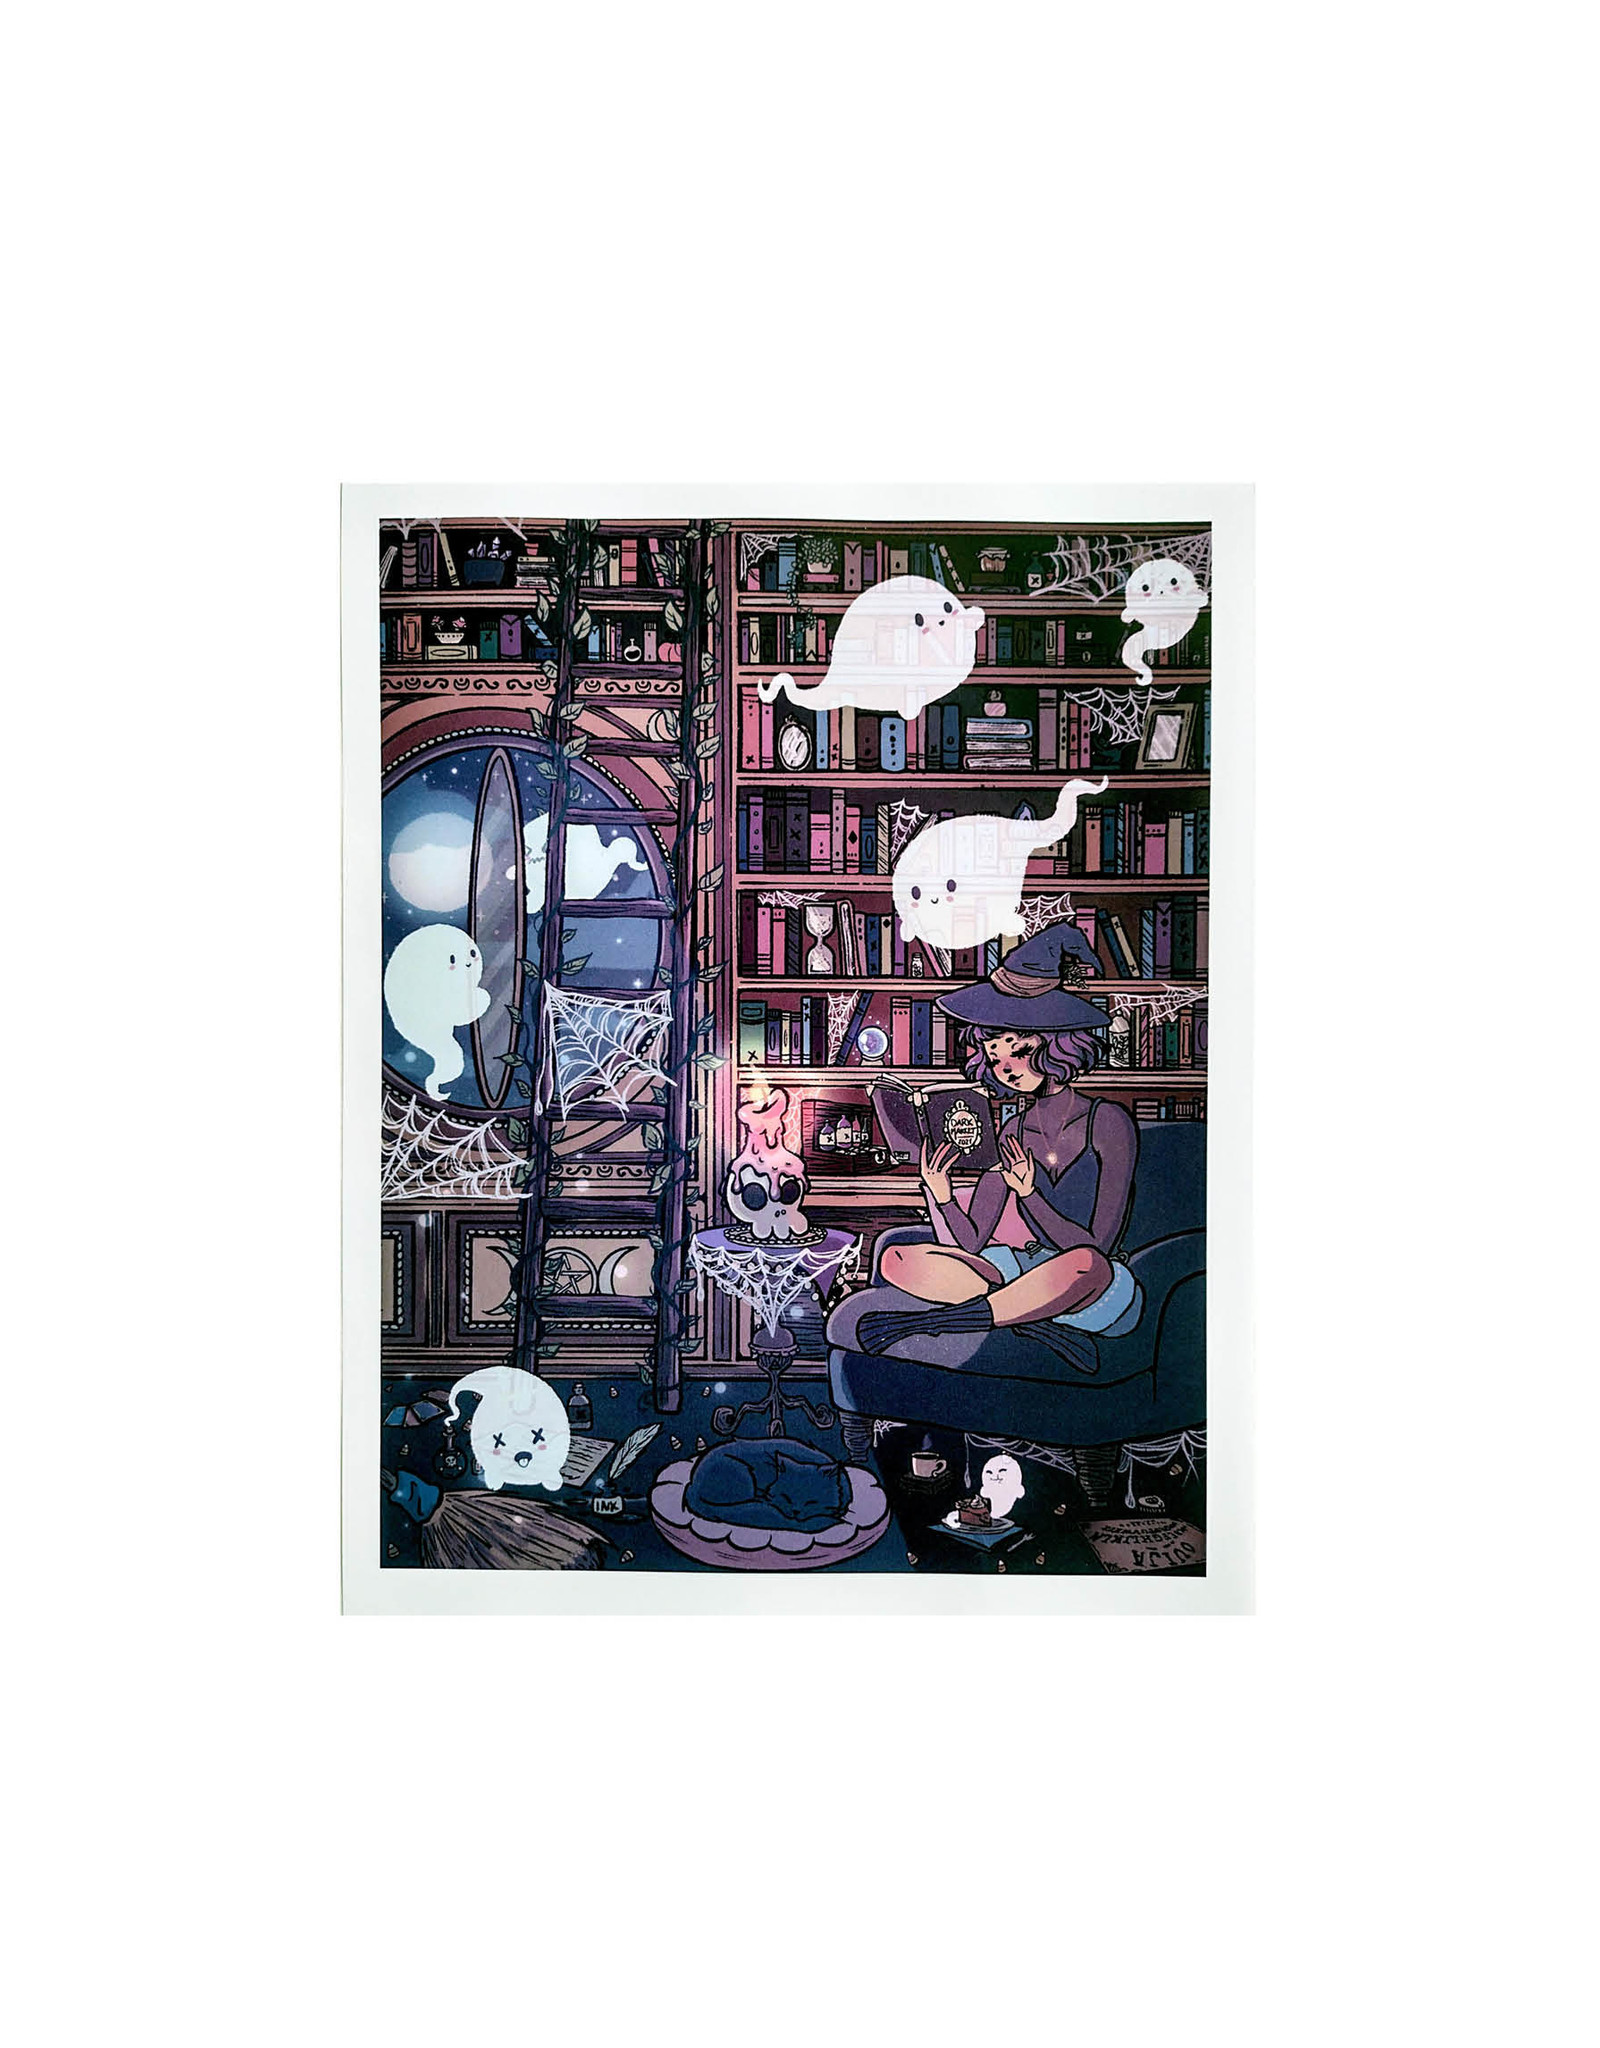 “The Witching Hour” digital print by Aurelia Dominguez